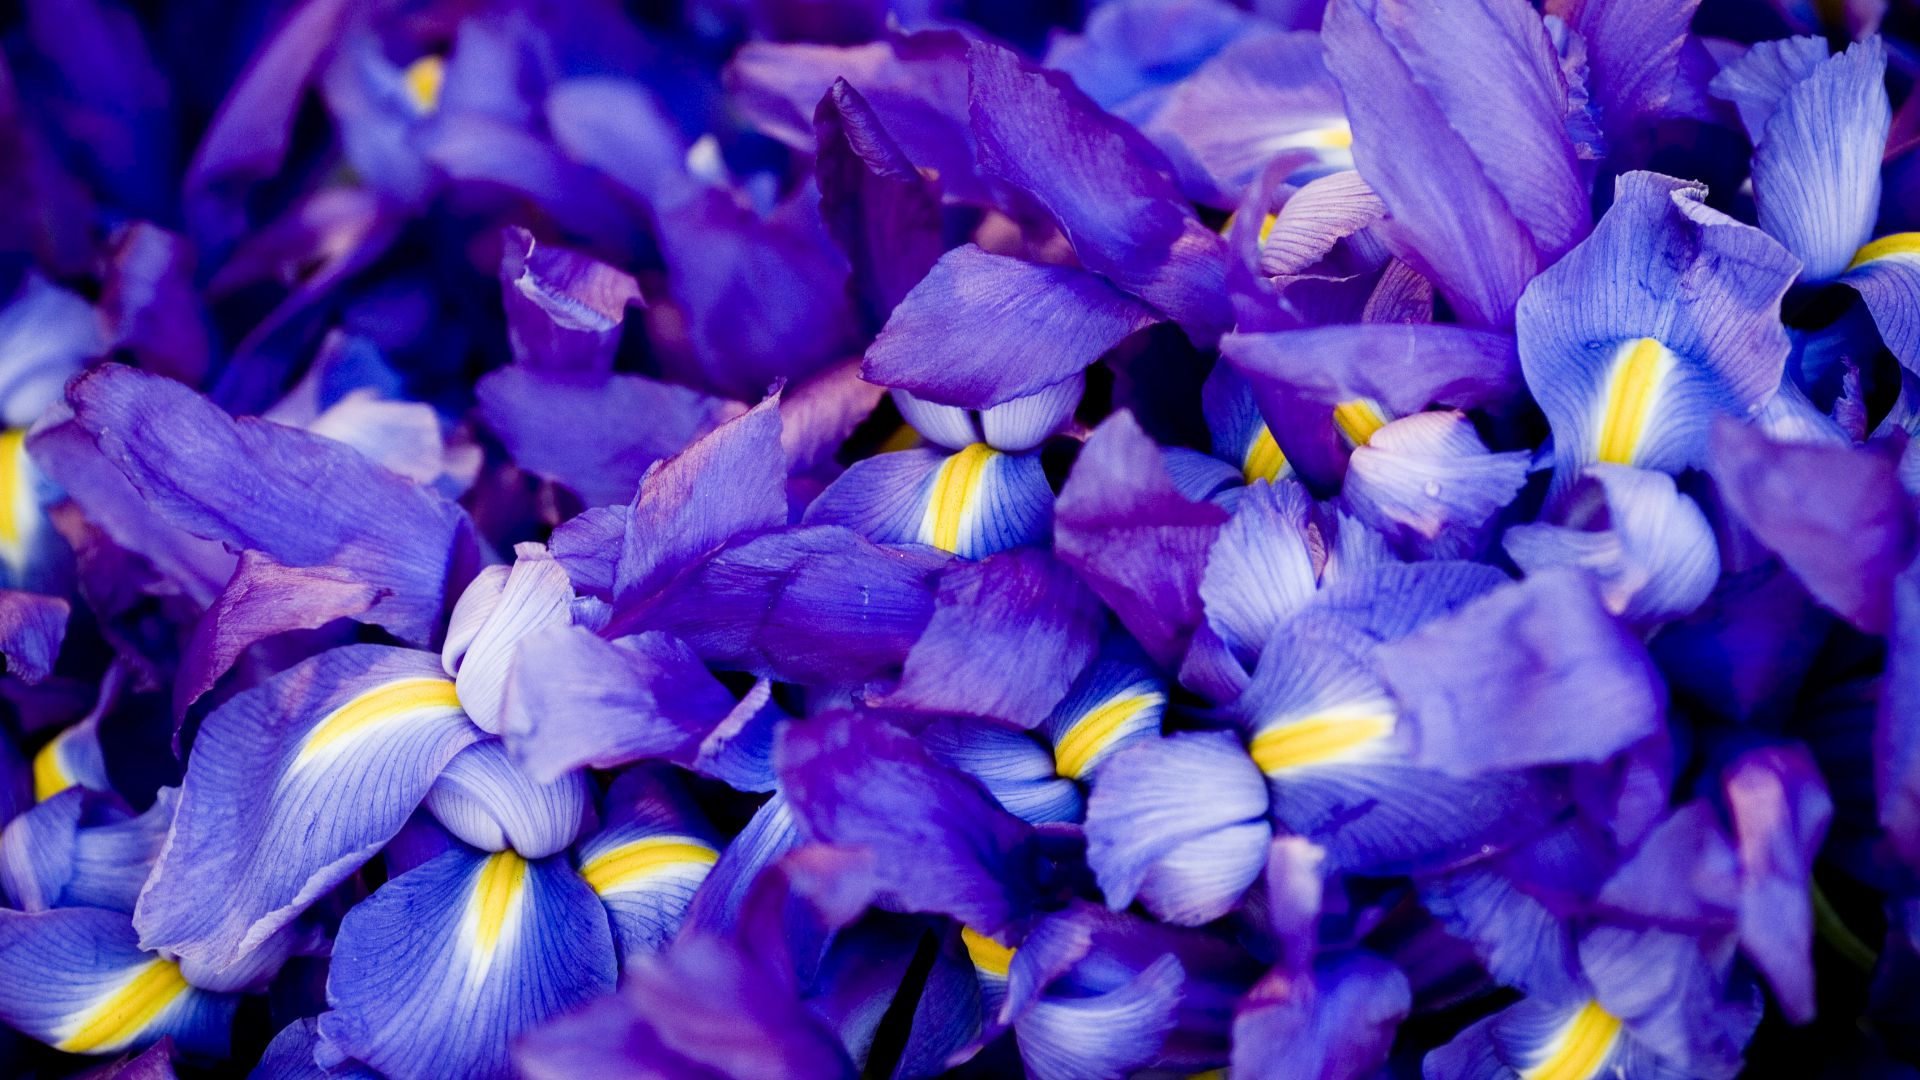 Ирис, 5k, 4k, макро, цветы, фиолетовый, Iris, 5k, 4k wallpaper, macro, flowers, purple (horizontal)